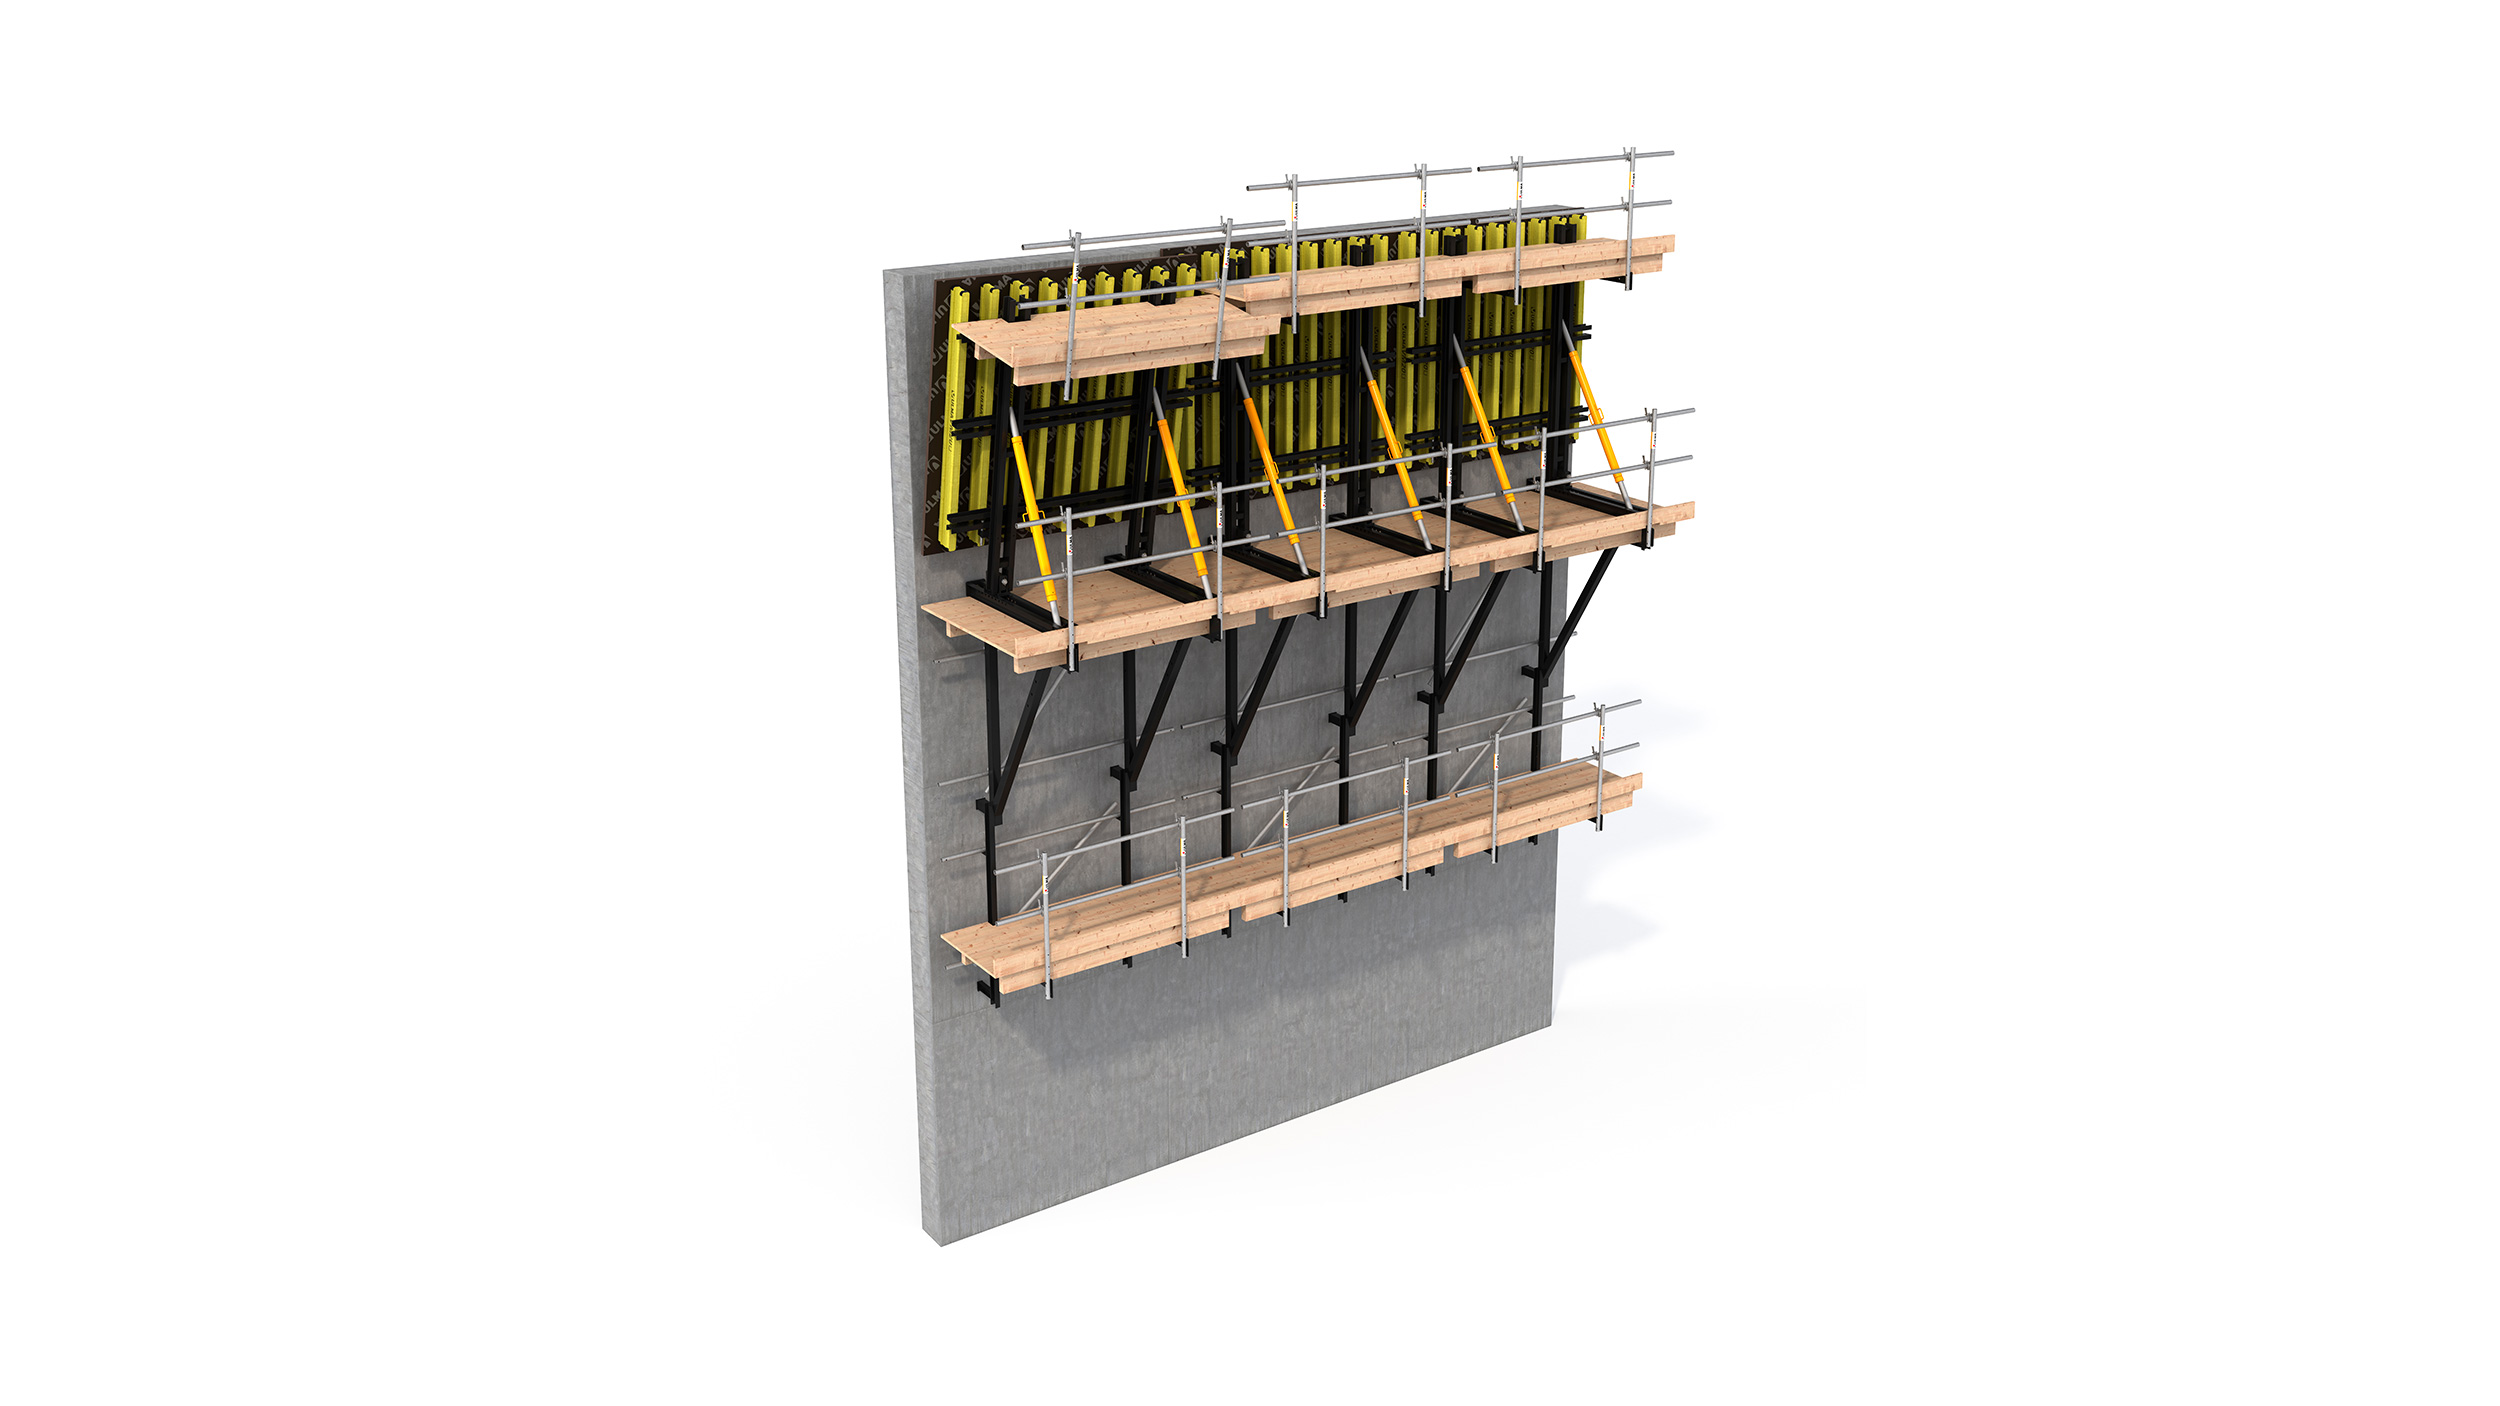 Sistema de cimbra trepante configurable para muros rectos o inclinados. Indicado para la construcción de presas, esclusas o galerías.